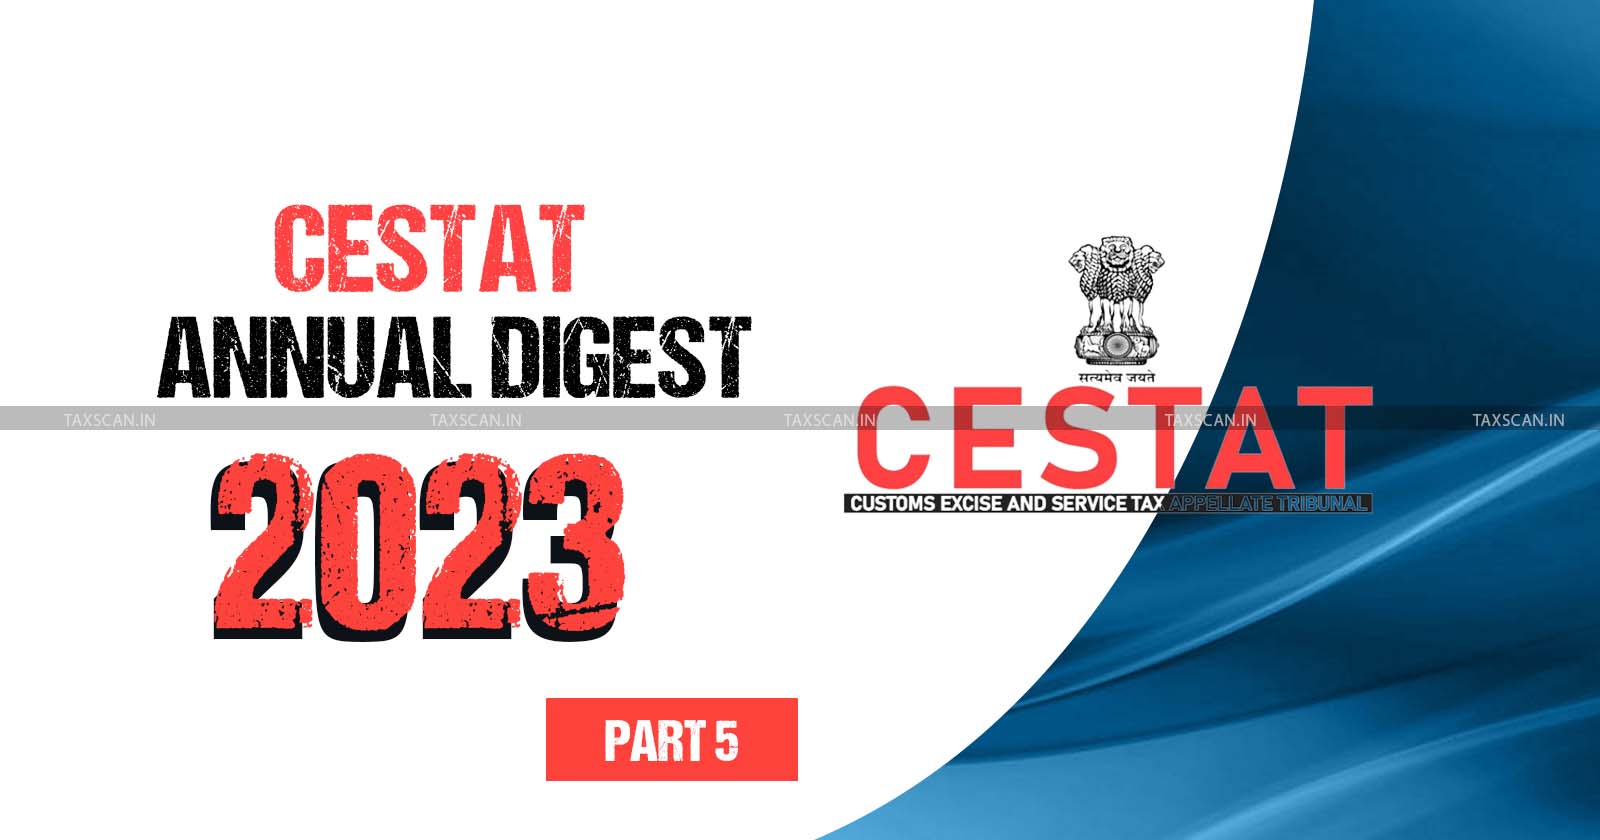 Annual Digest 2023 - CESTAT Annual Digest 2023- cestat - TAXSCAN